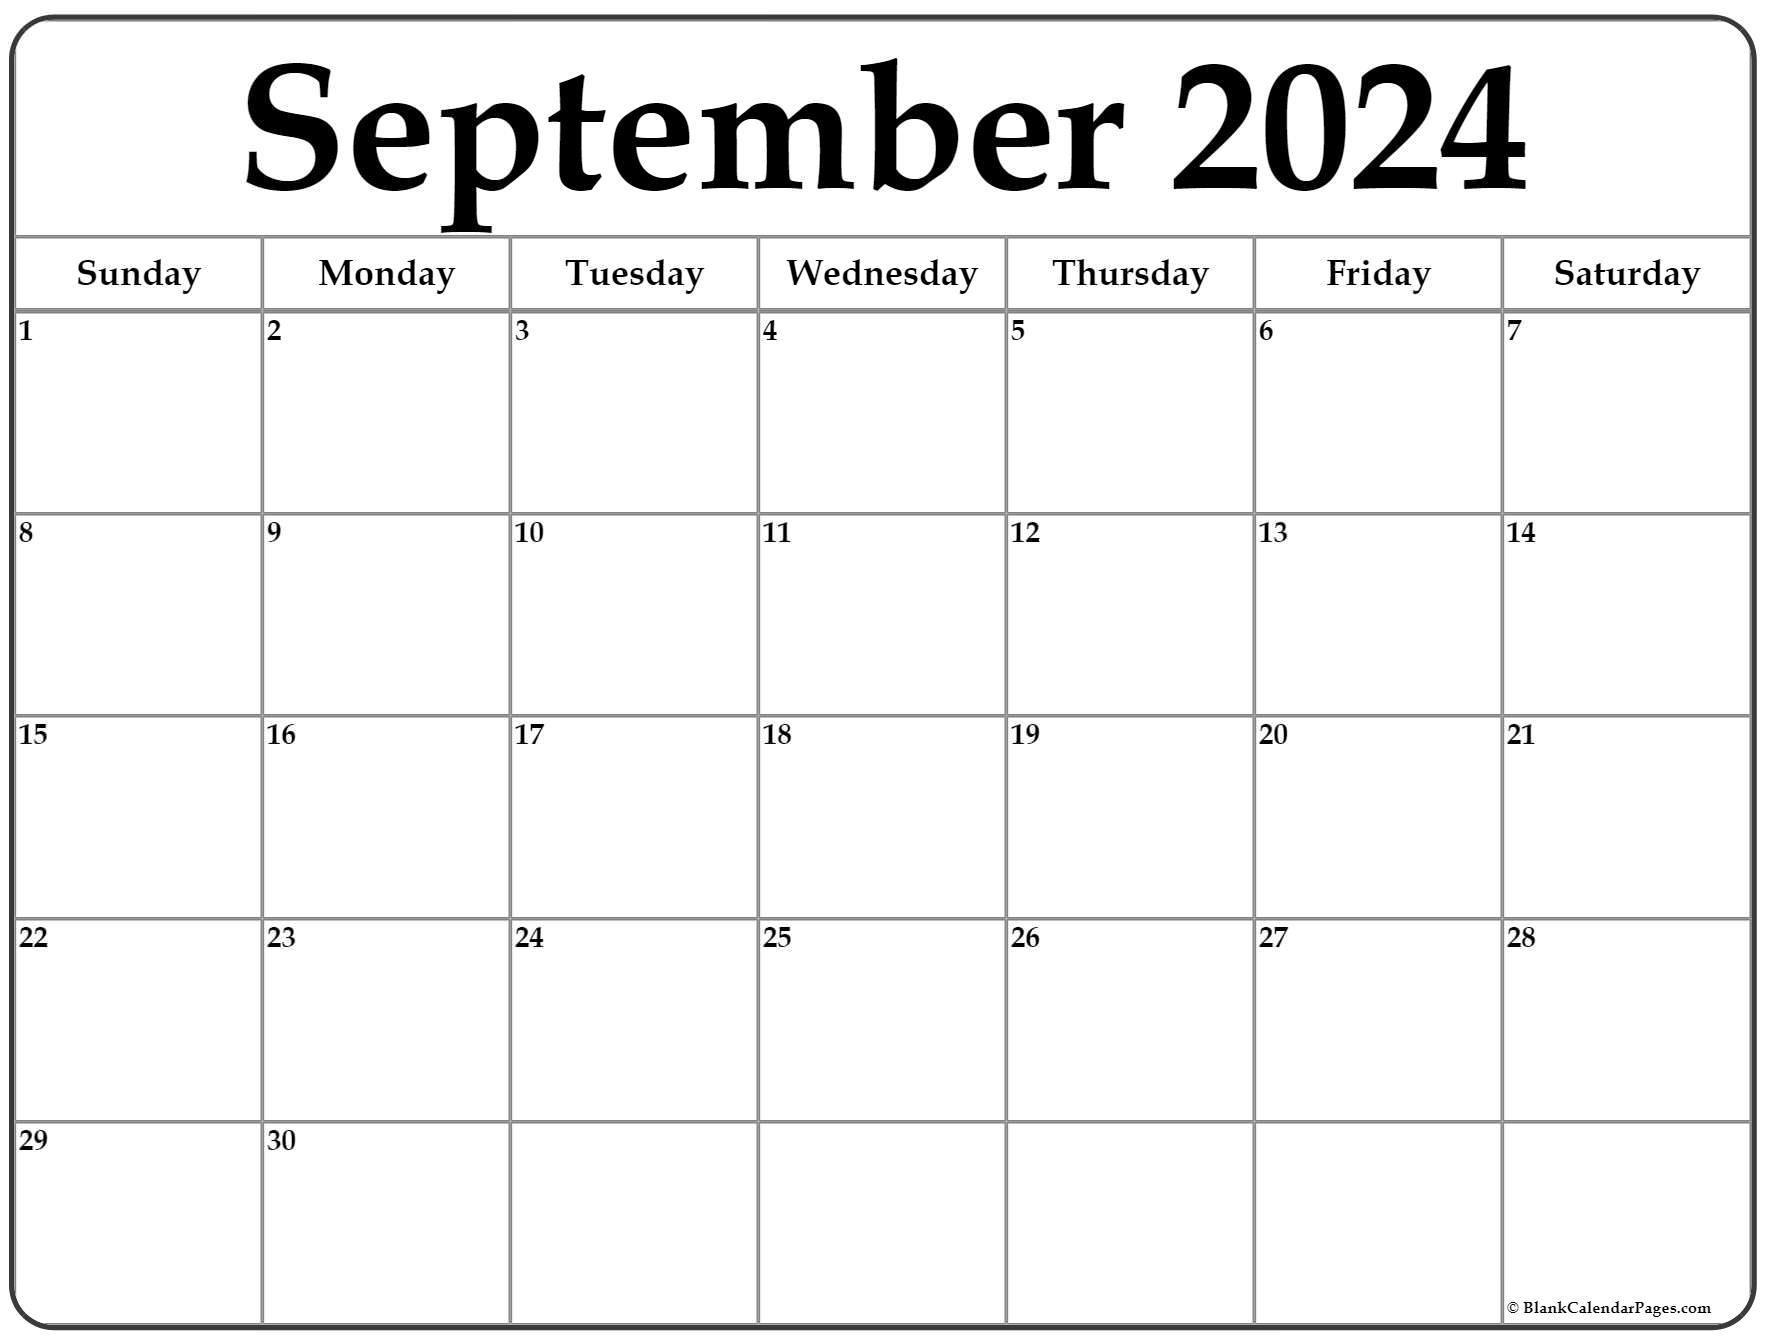 Monthly Calendar 2022 September September 2022 Calendar | Free Printable Calendar Templates